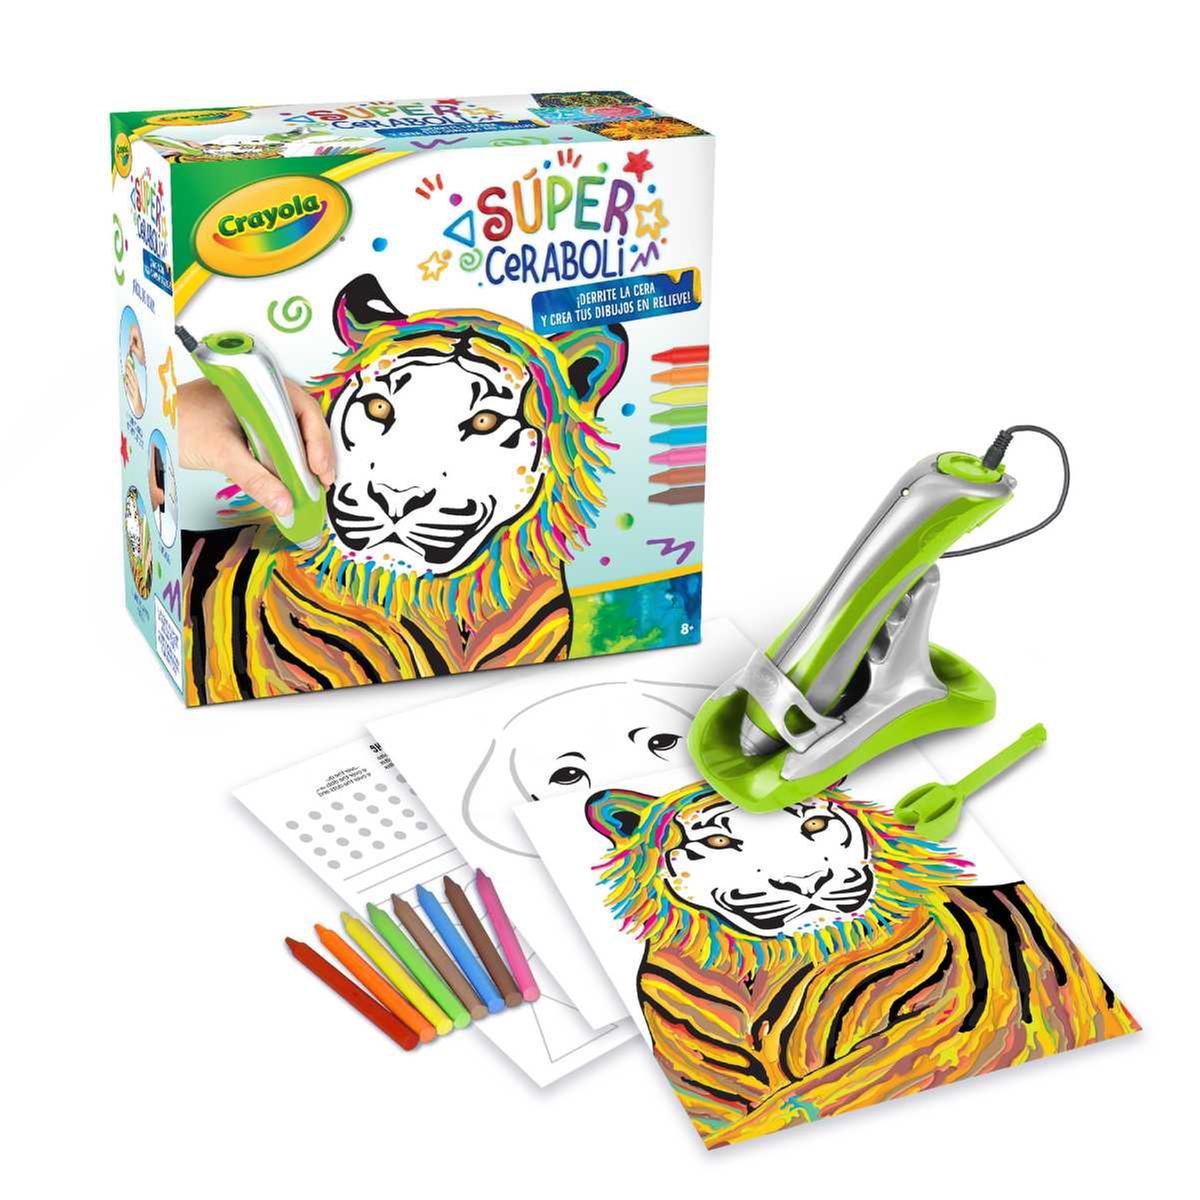 Crayola - Súper ceraboli tigre | Catálogo Navidad | Toys"R"Us España